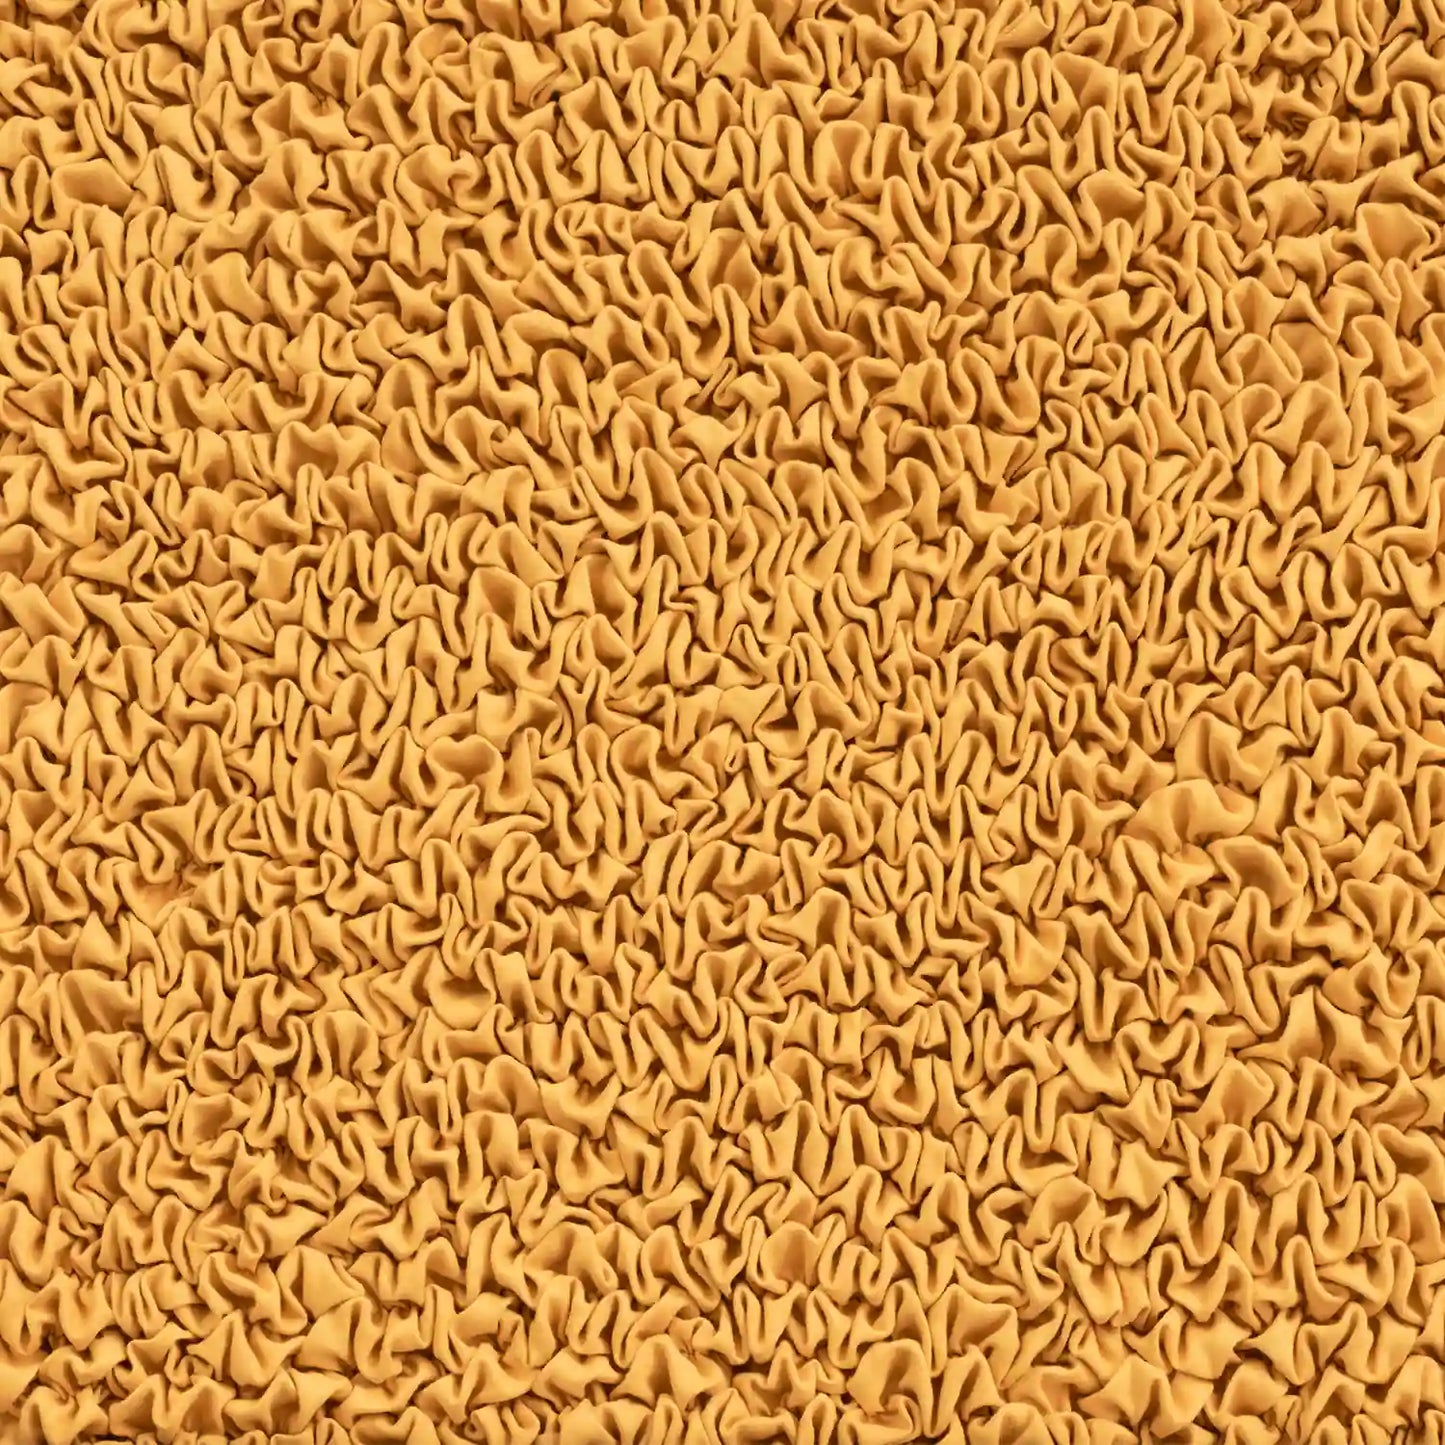 Footstool Cover - Mango, Microfibra